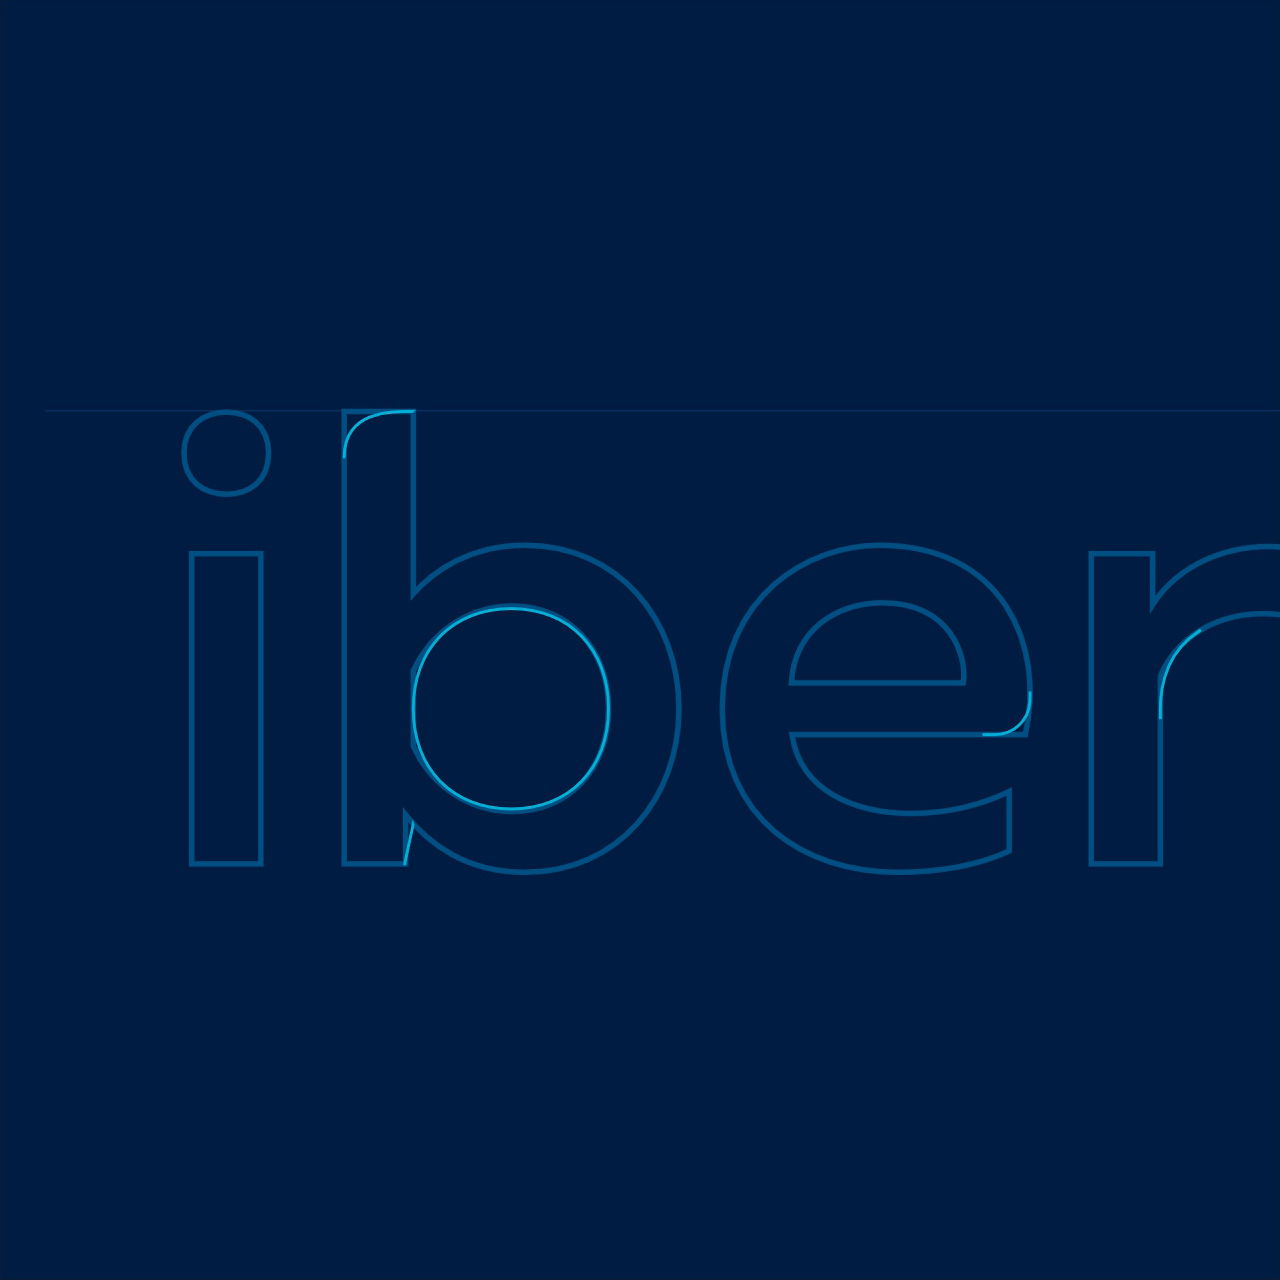 Iberoclean logo retoque - javier real